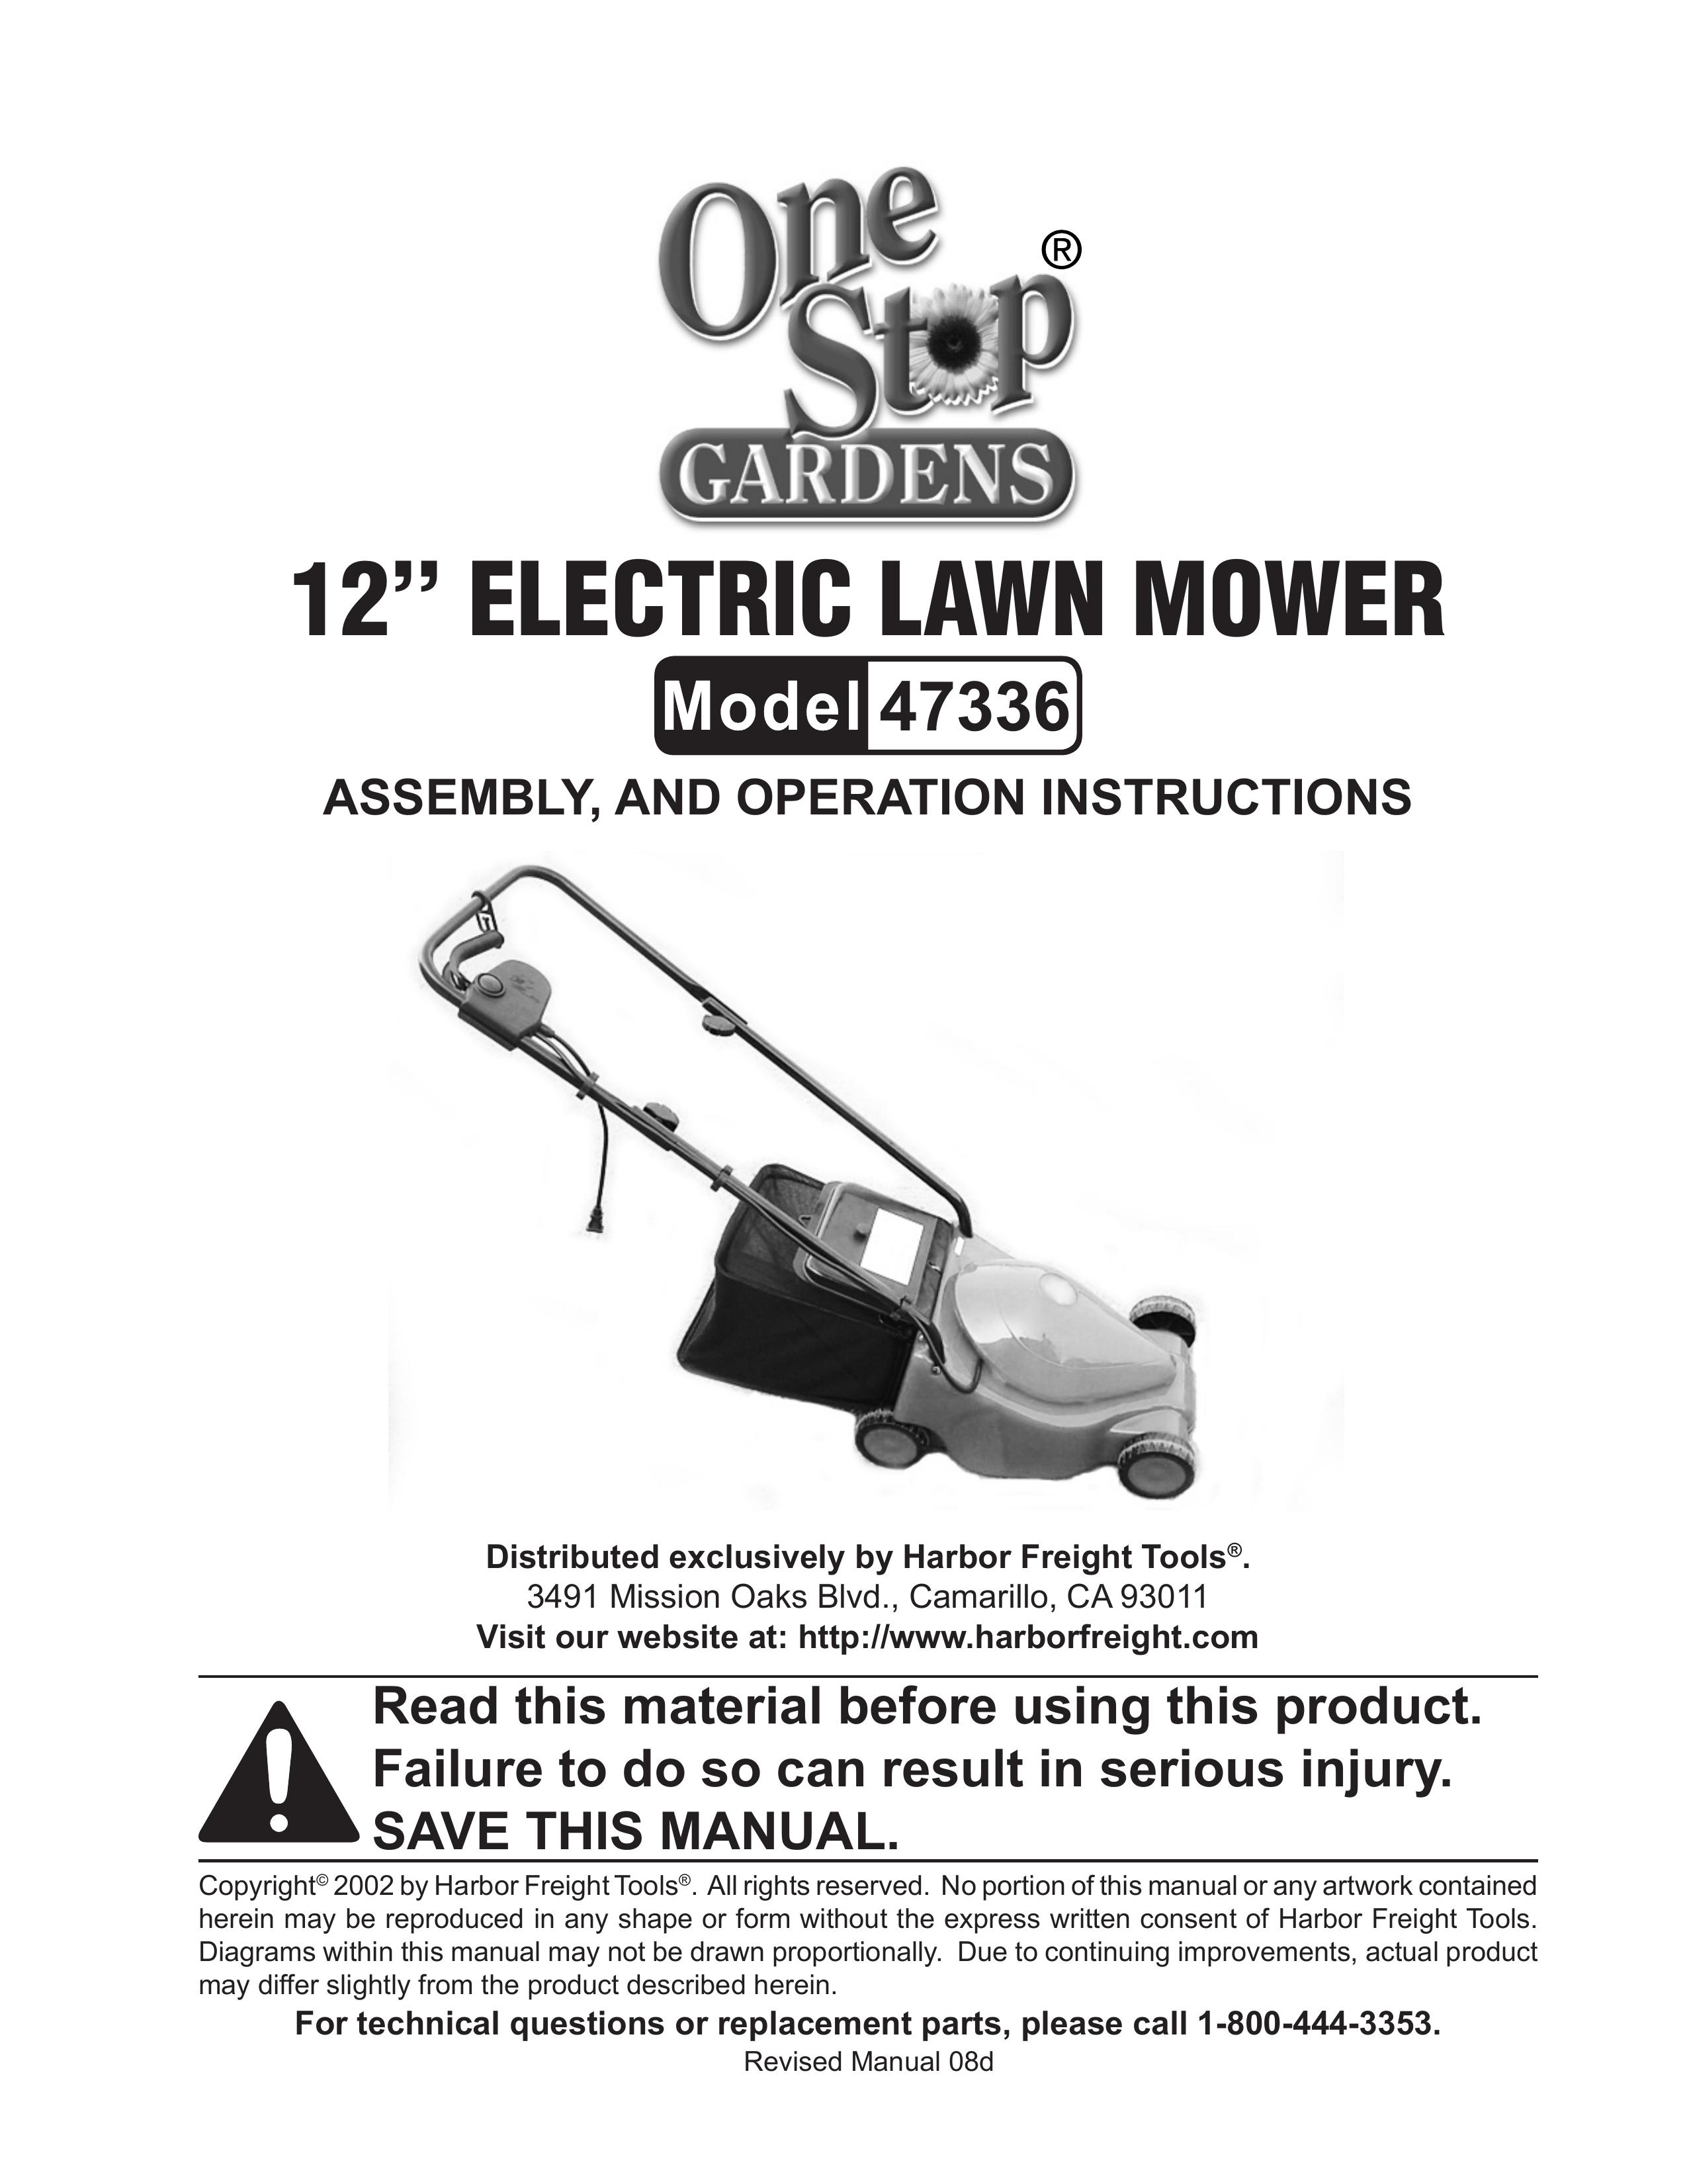 Harbor Freight Tools 47336 Lawn Mower User Manual